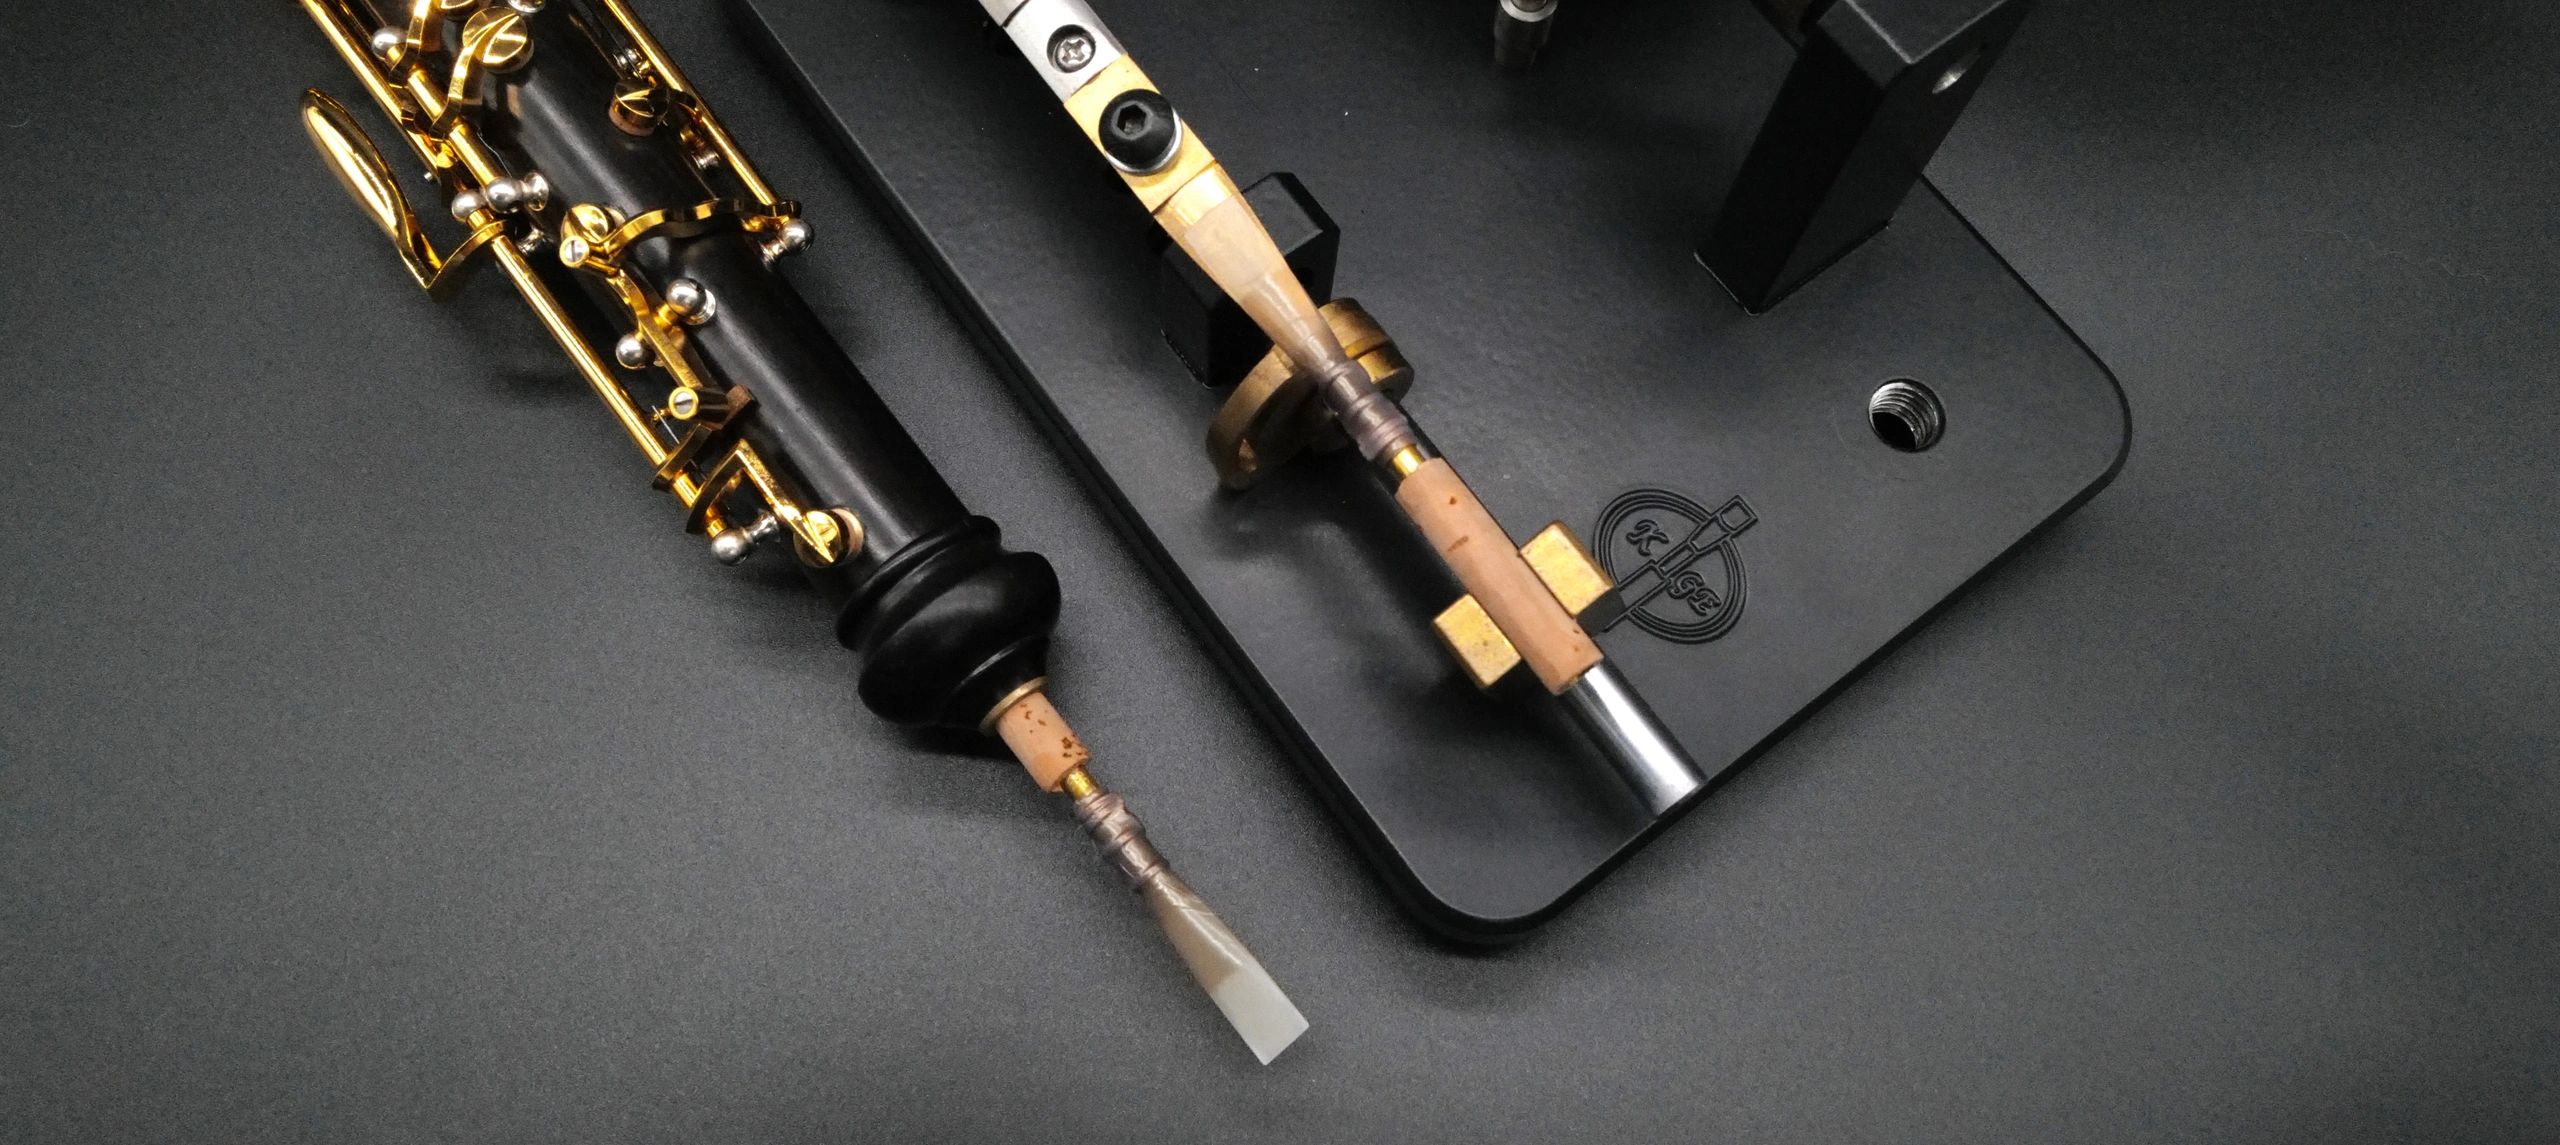 K.GE oboe, reed making machine, profiling machine, synthetic oboe reed